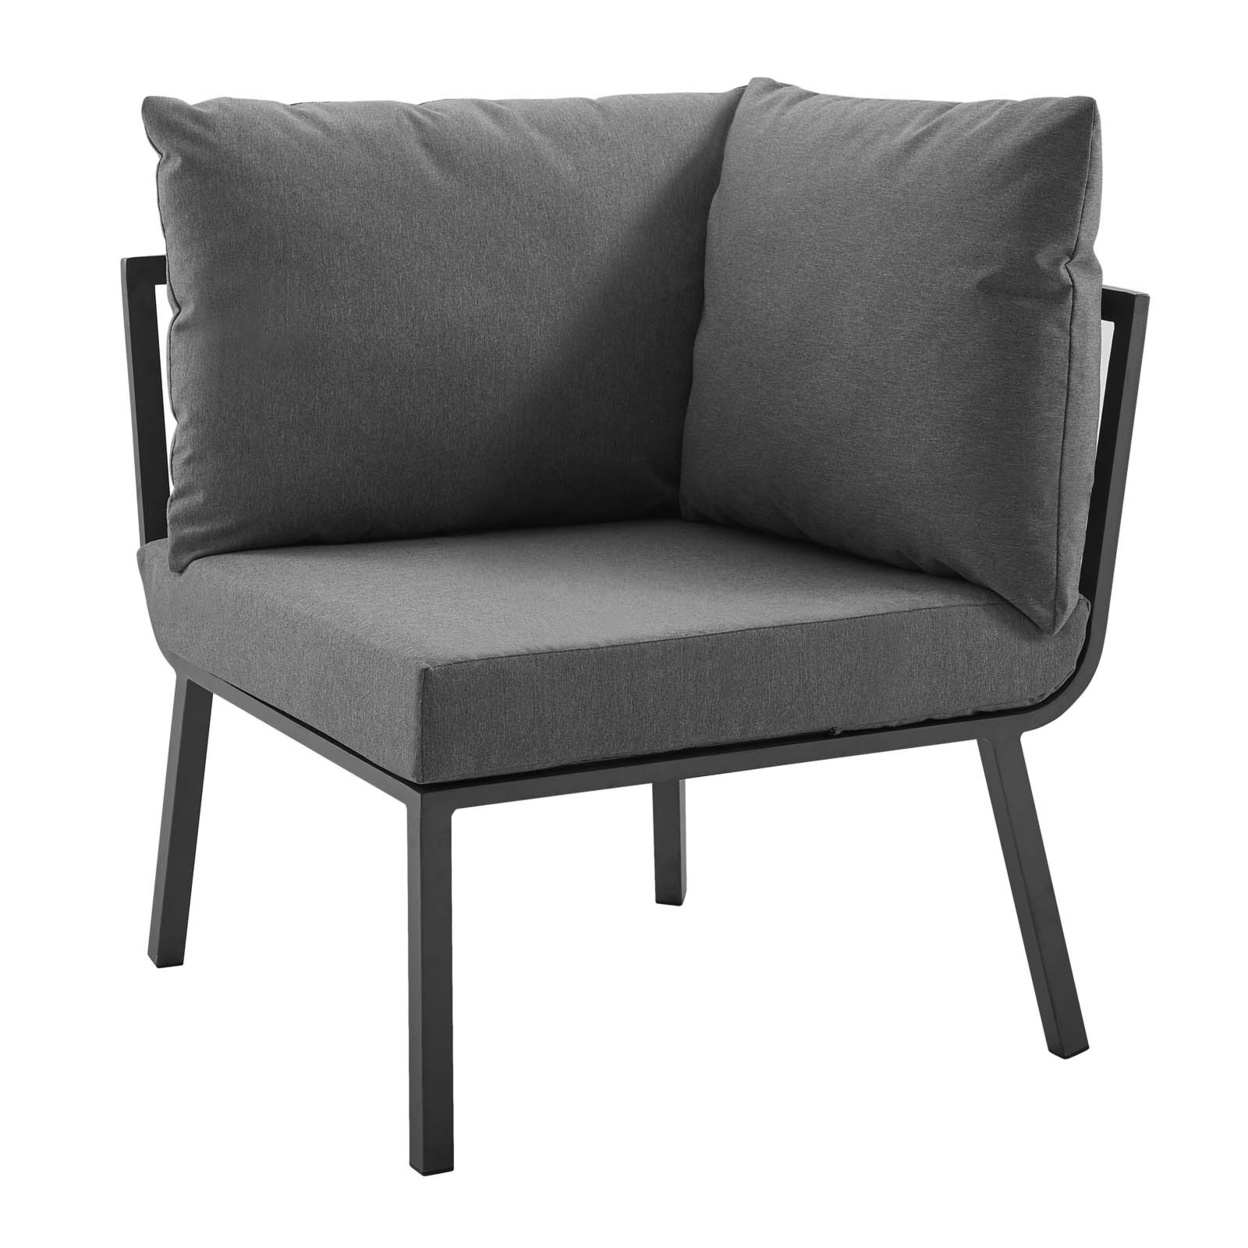 Riverside Outdoor Patio Aluminum Corner Chair,Gray Charcoal